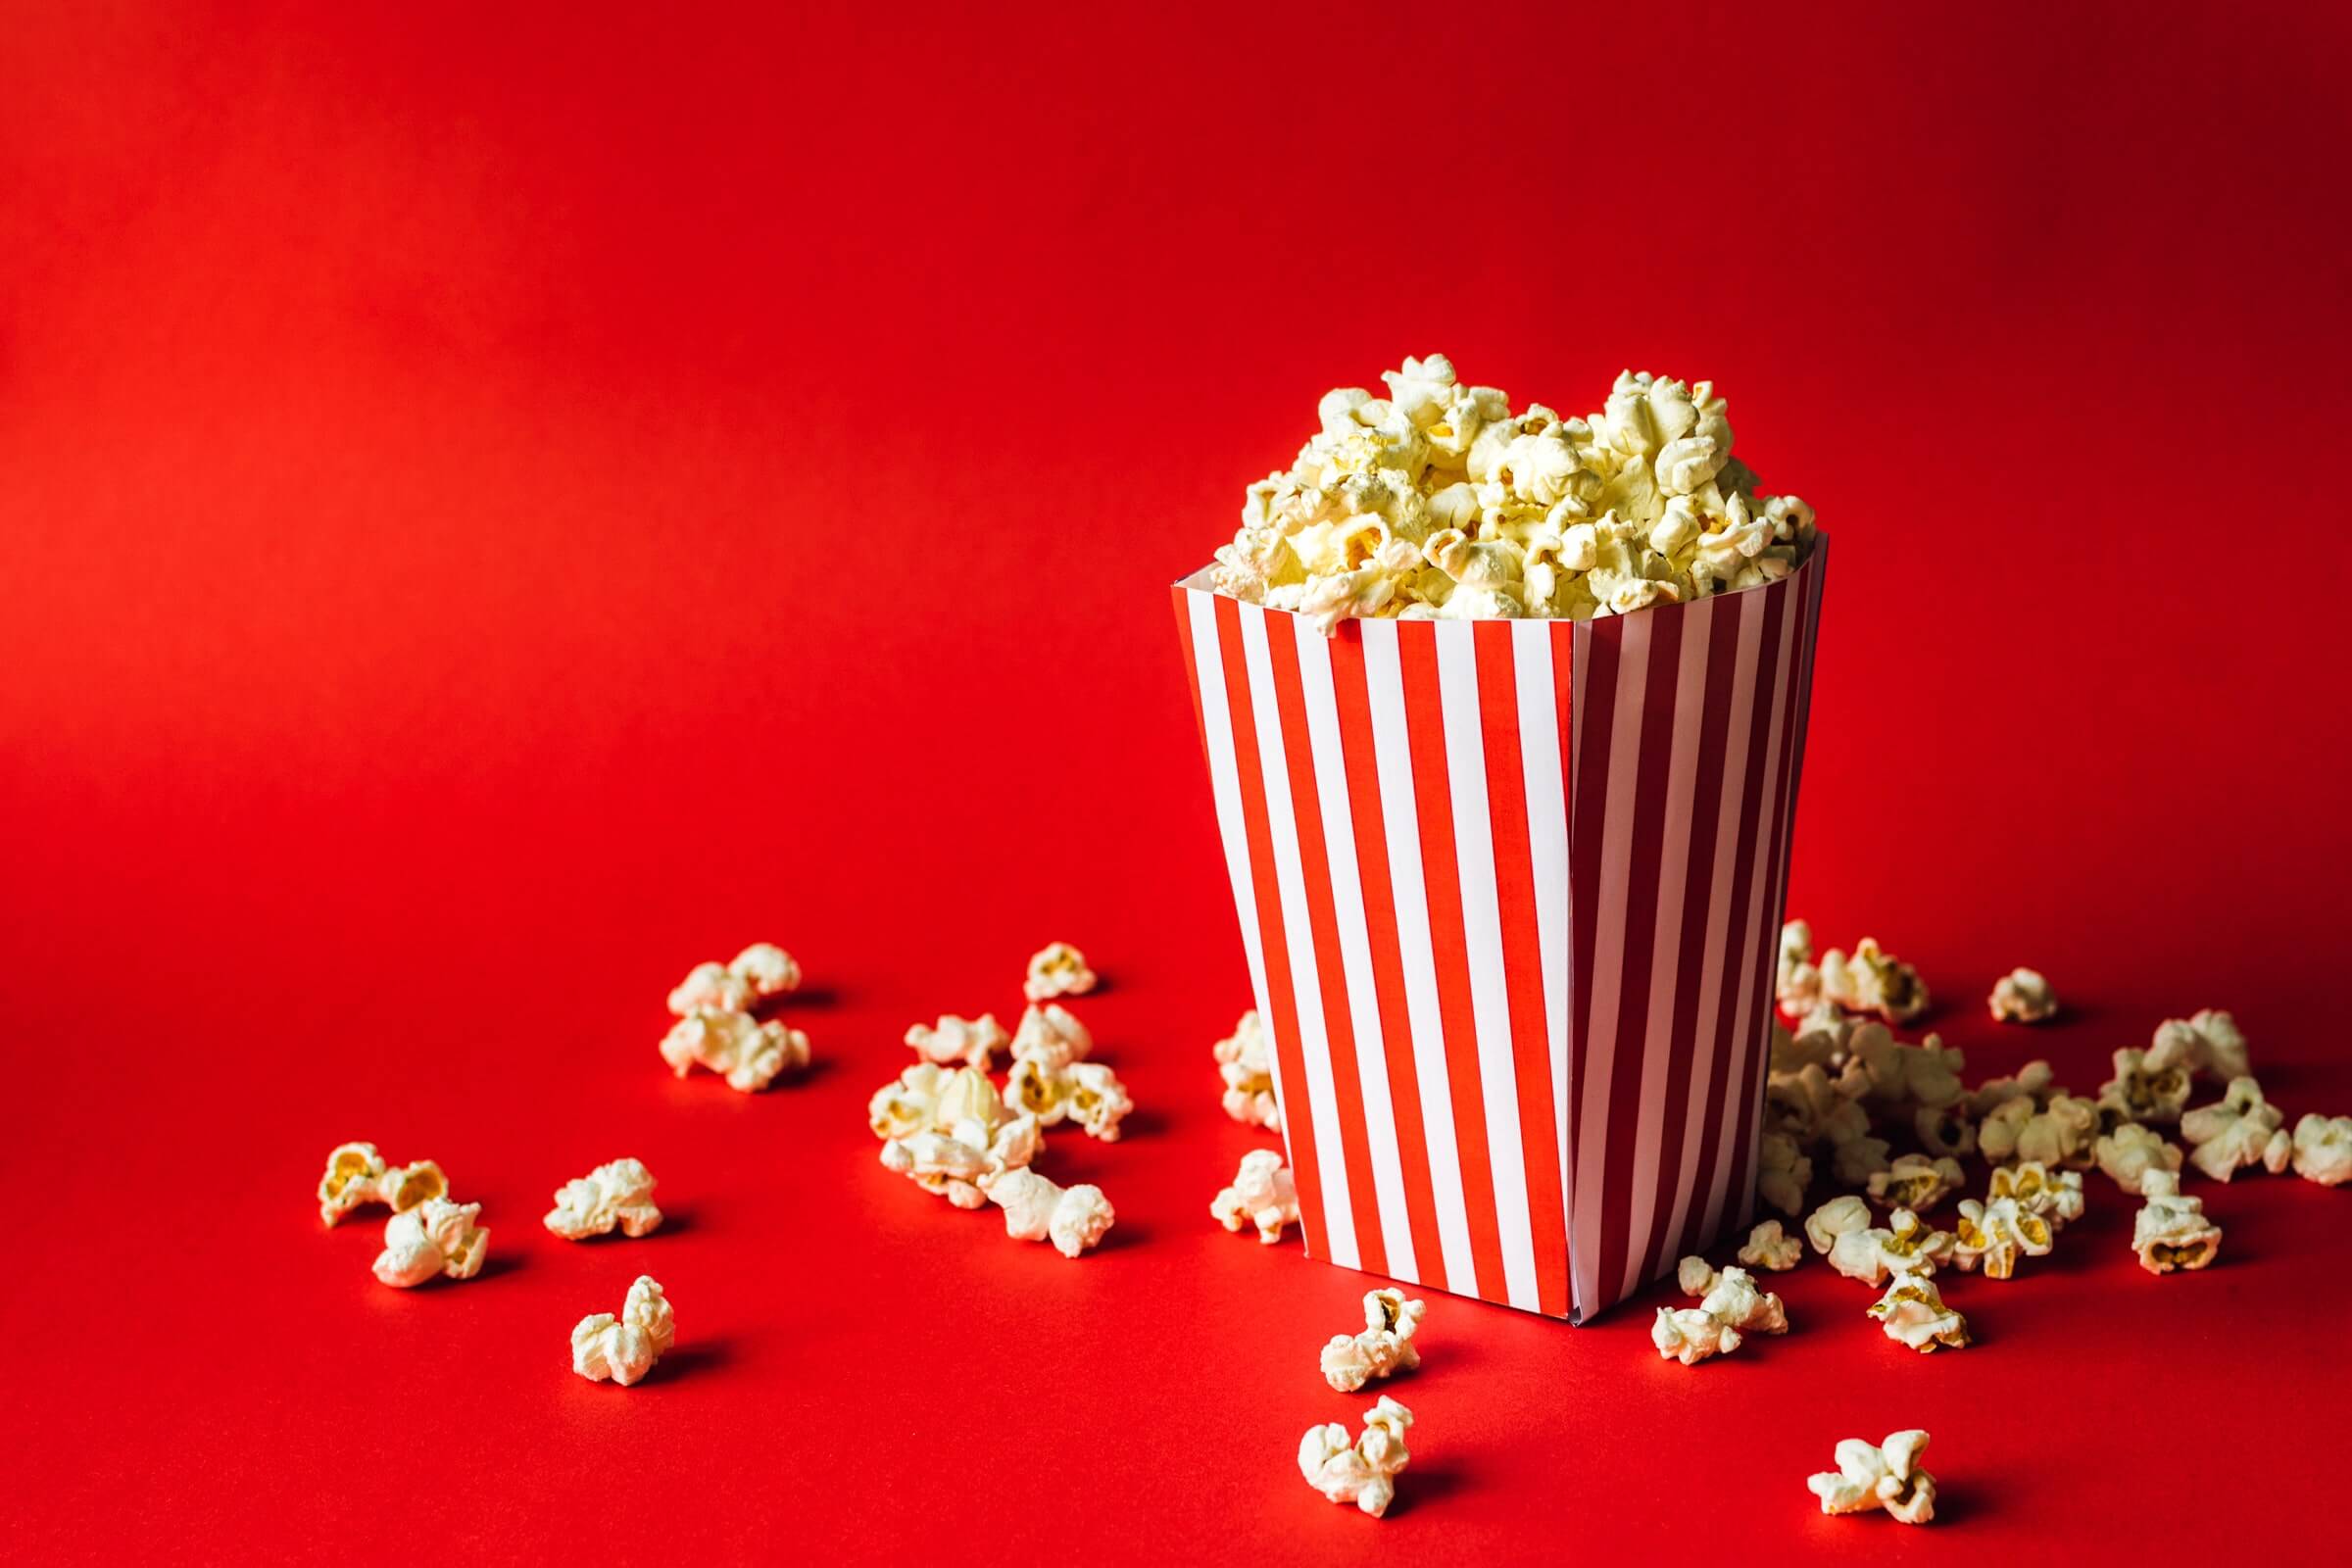 movie review site popcorn